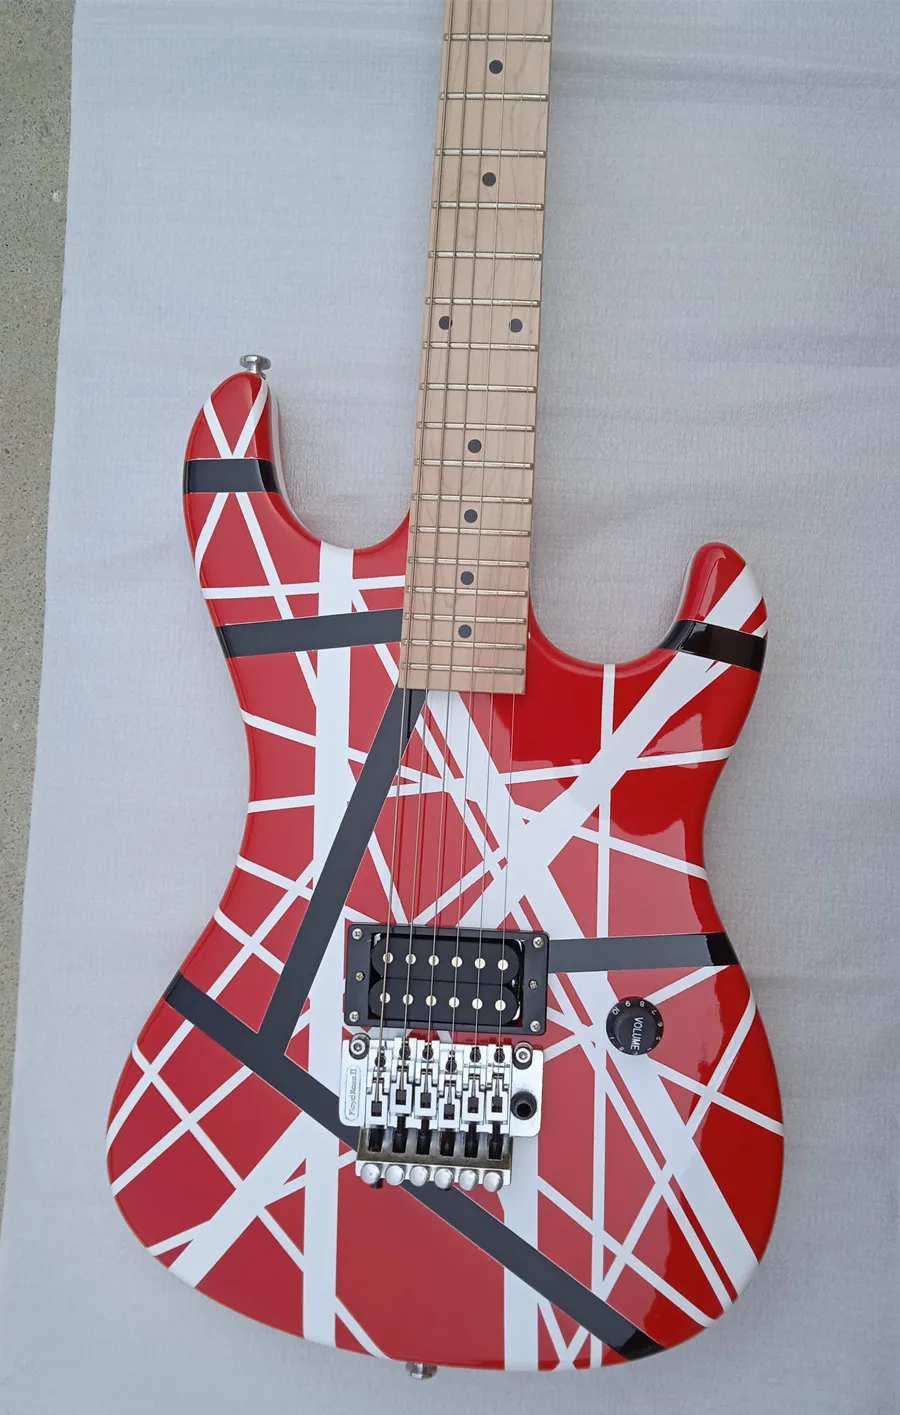 

Electric Guitar 6-string 5150 white striped Floyd Rose vibrato bridge lock nut maple fingerboard Right -handed